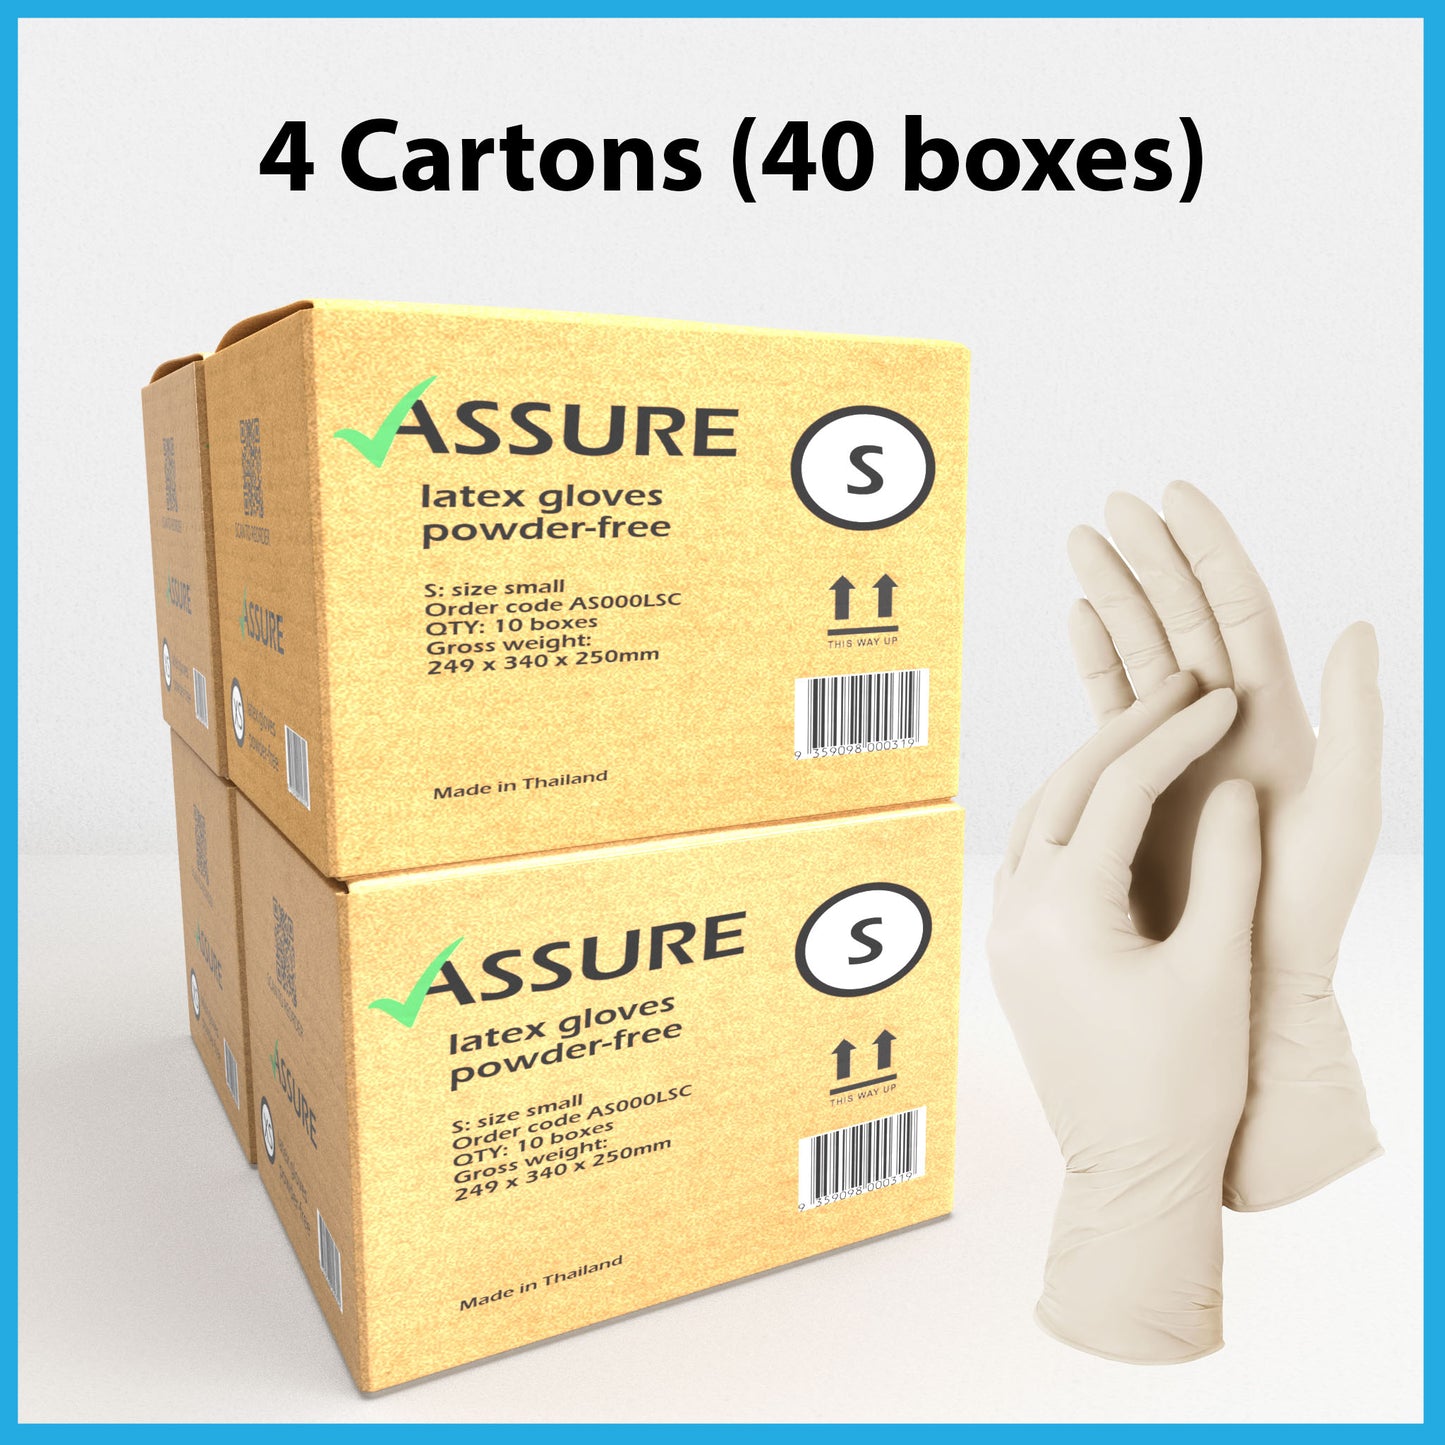 Bulk Saver - ASSURE Latex Gloves, 4 cartons @ $5.50 per box